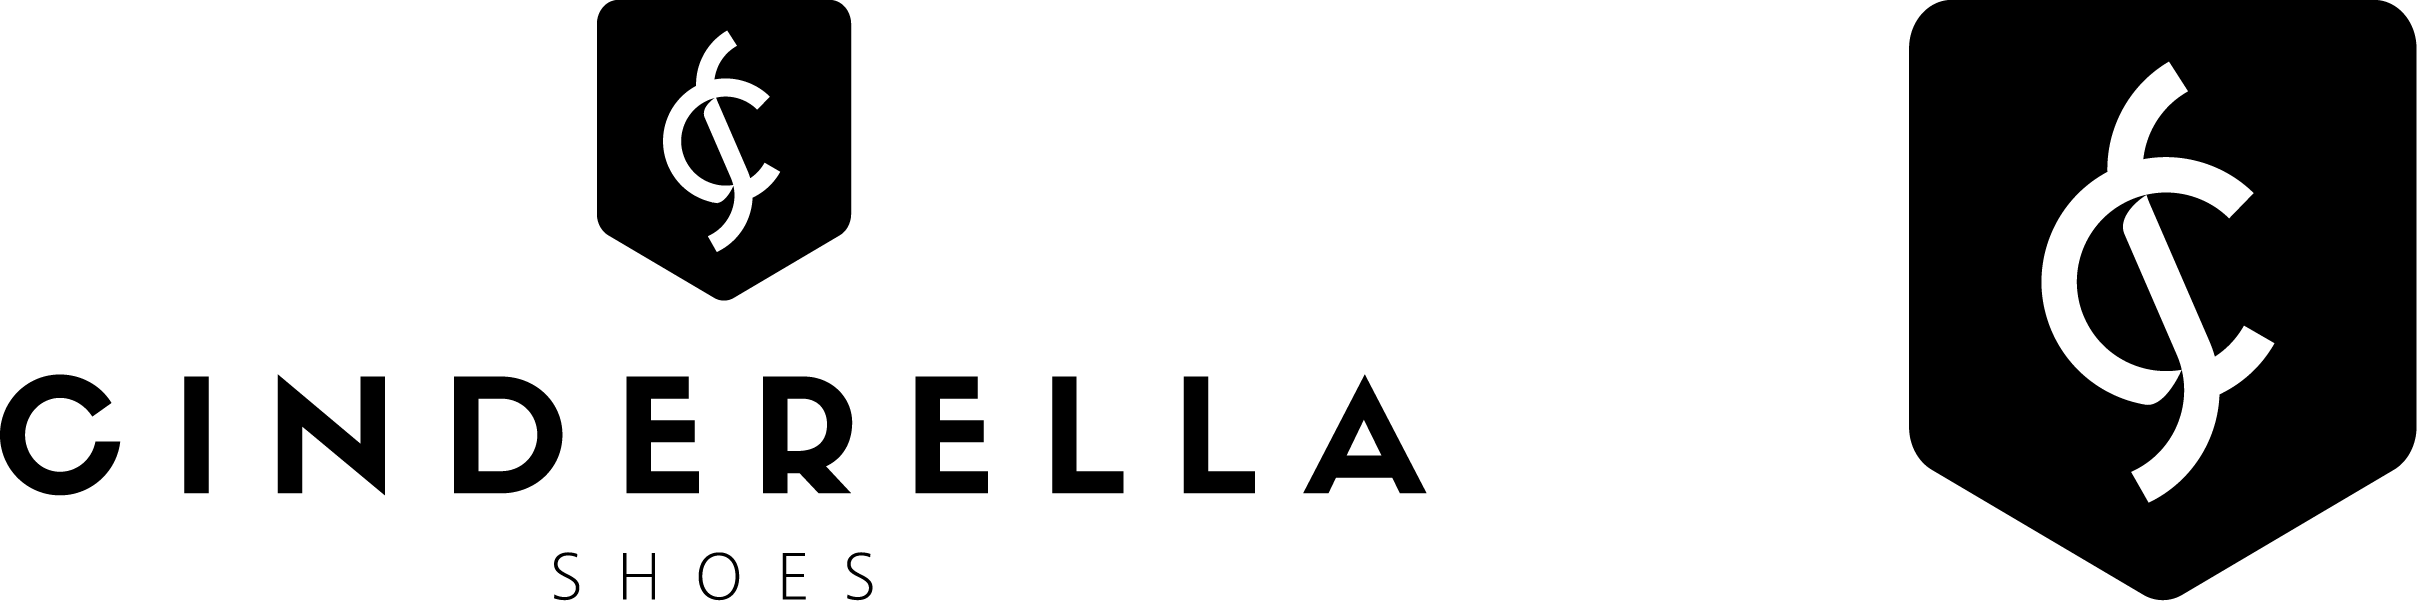 Cinderella Logo - Platform Media